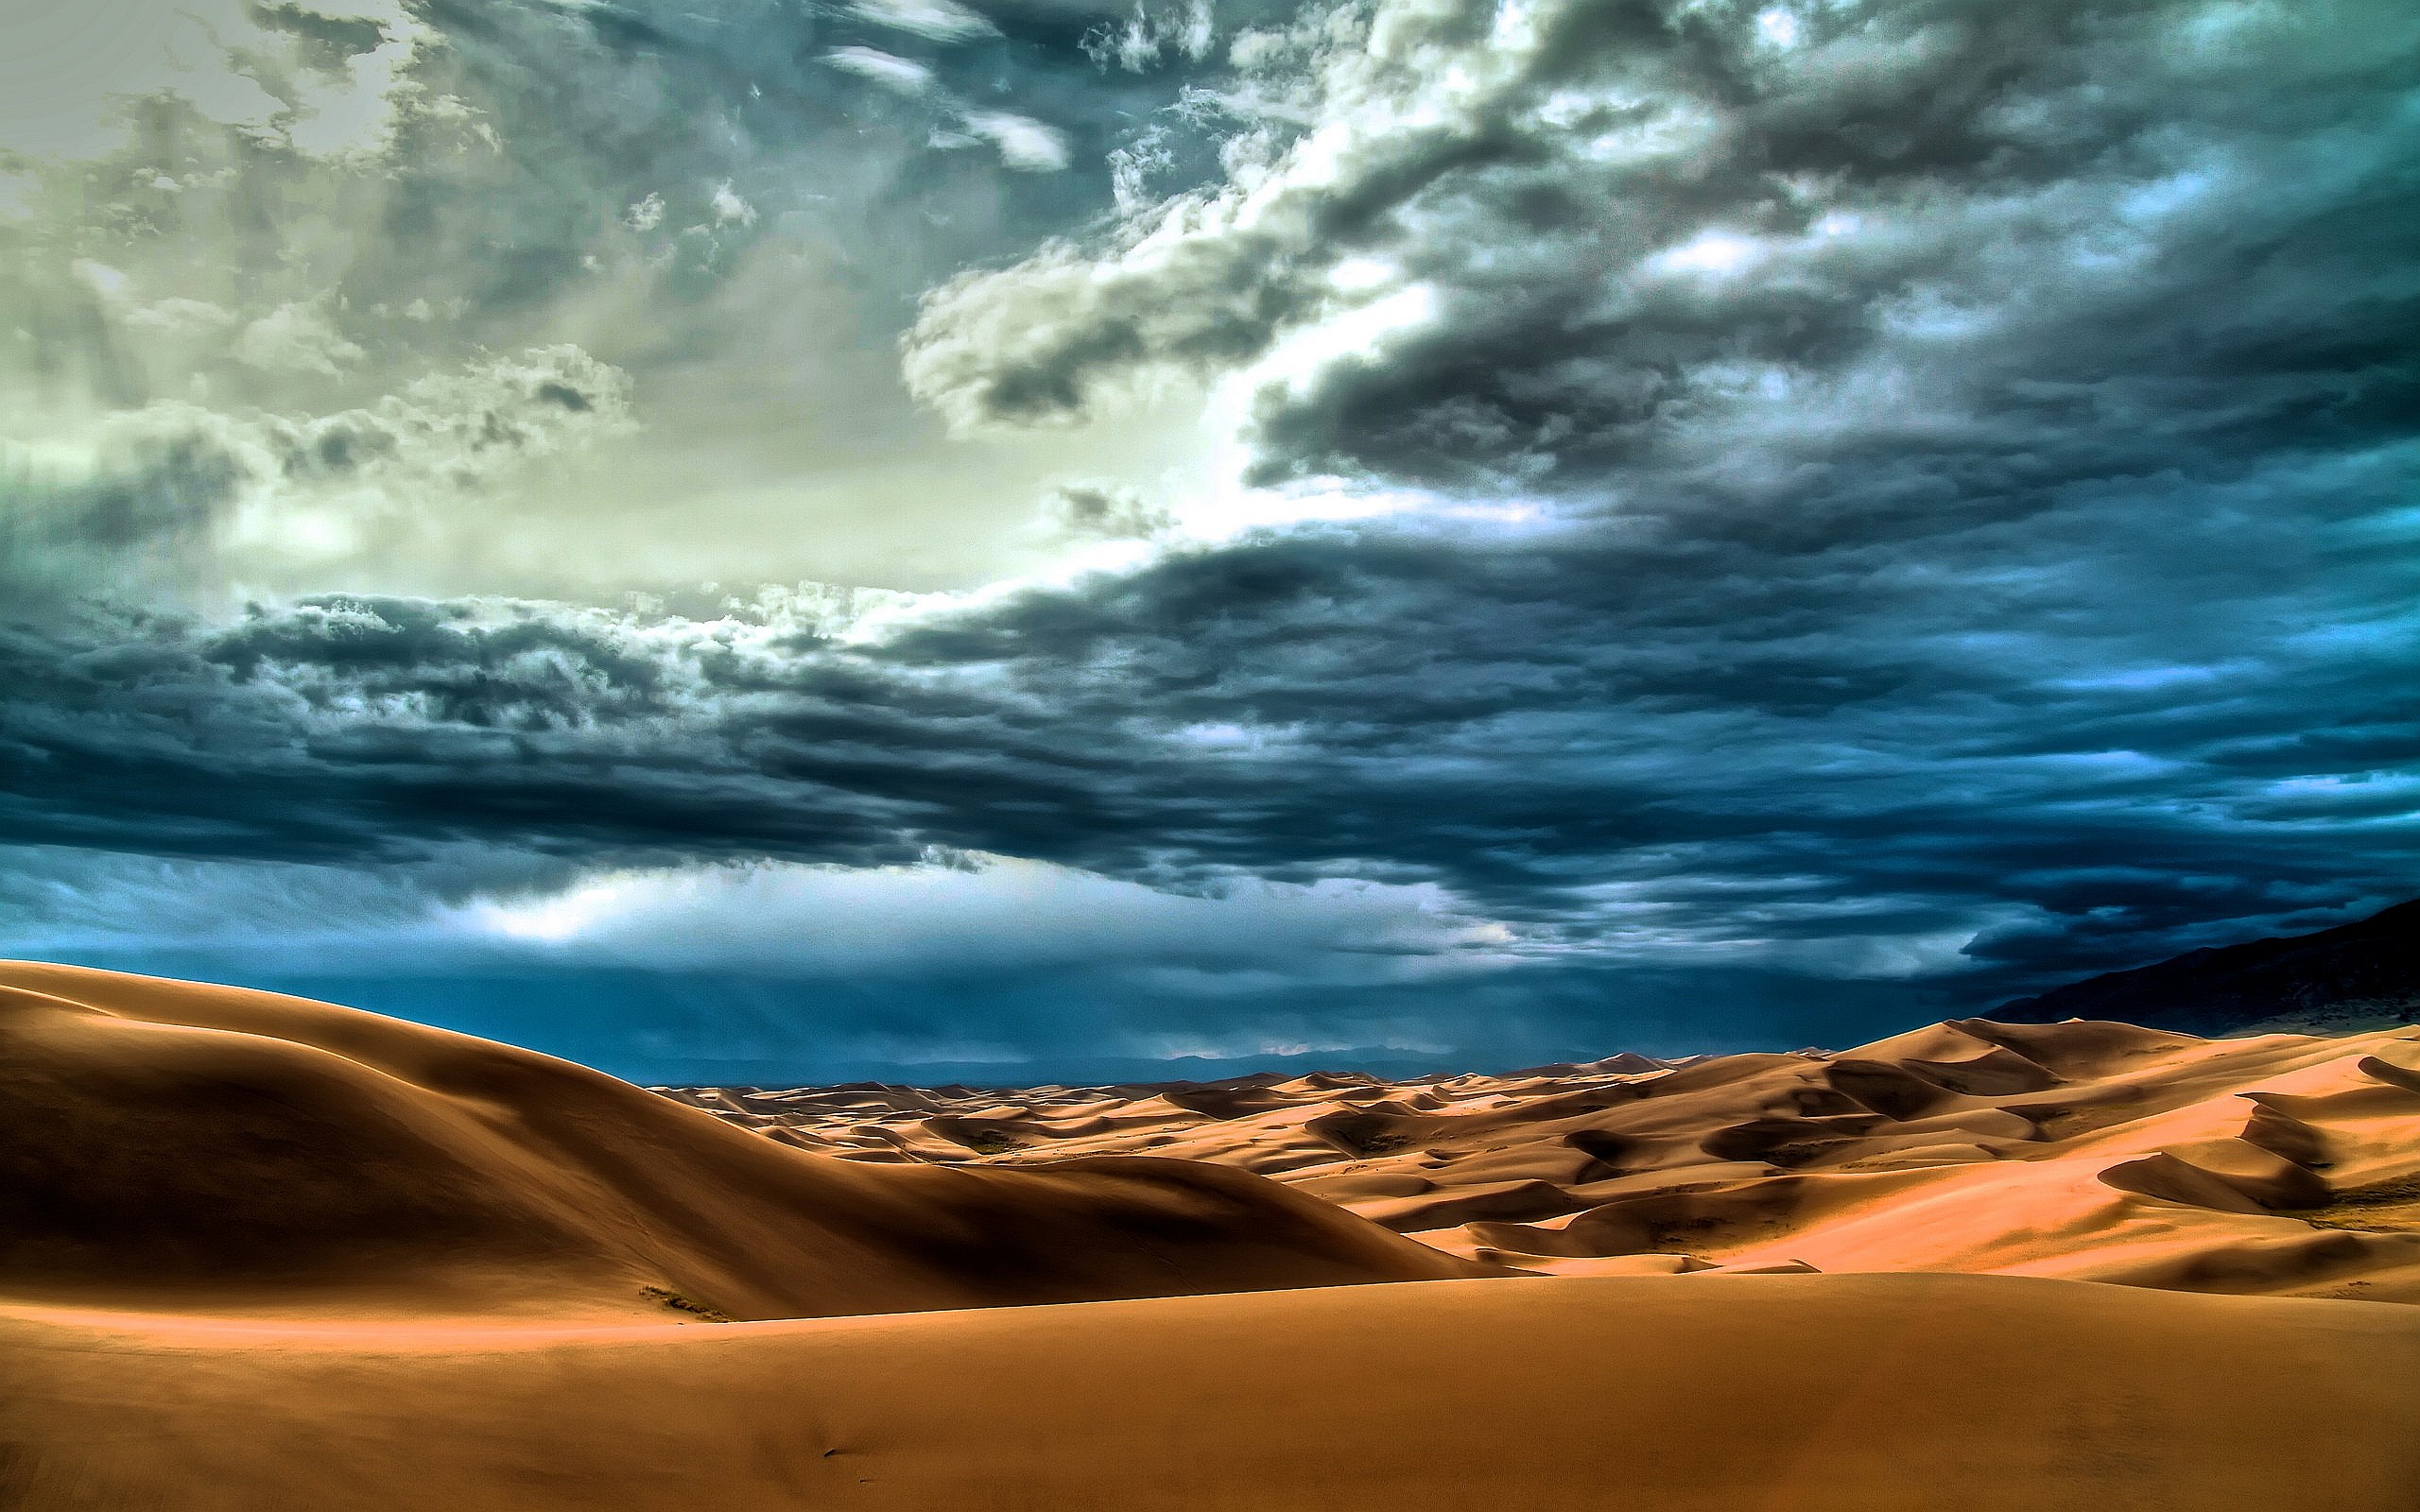 Desert Sky With Amazing Scenery Wallpapers - Zibrato